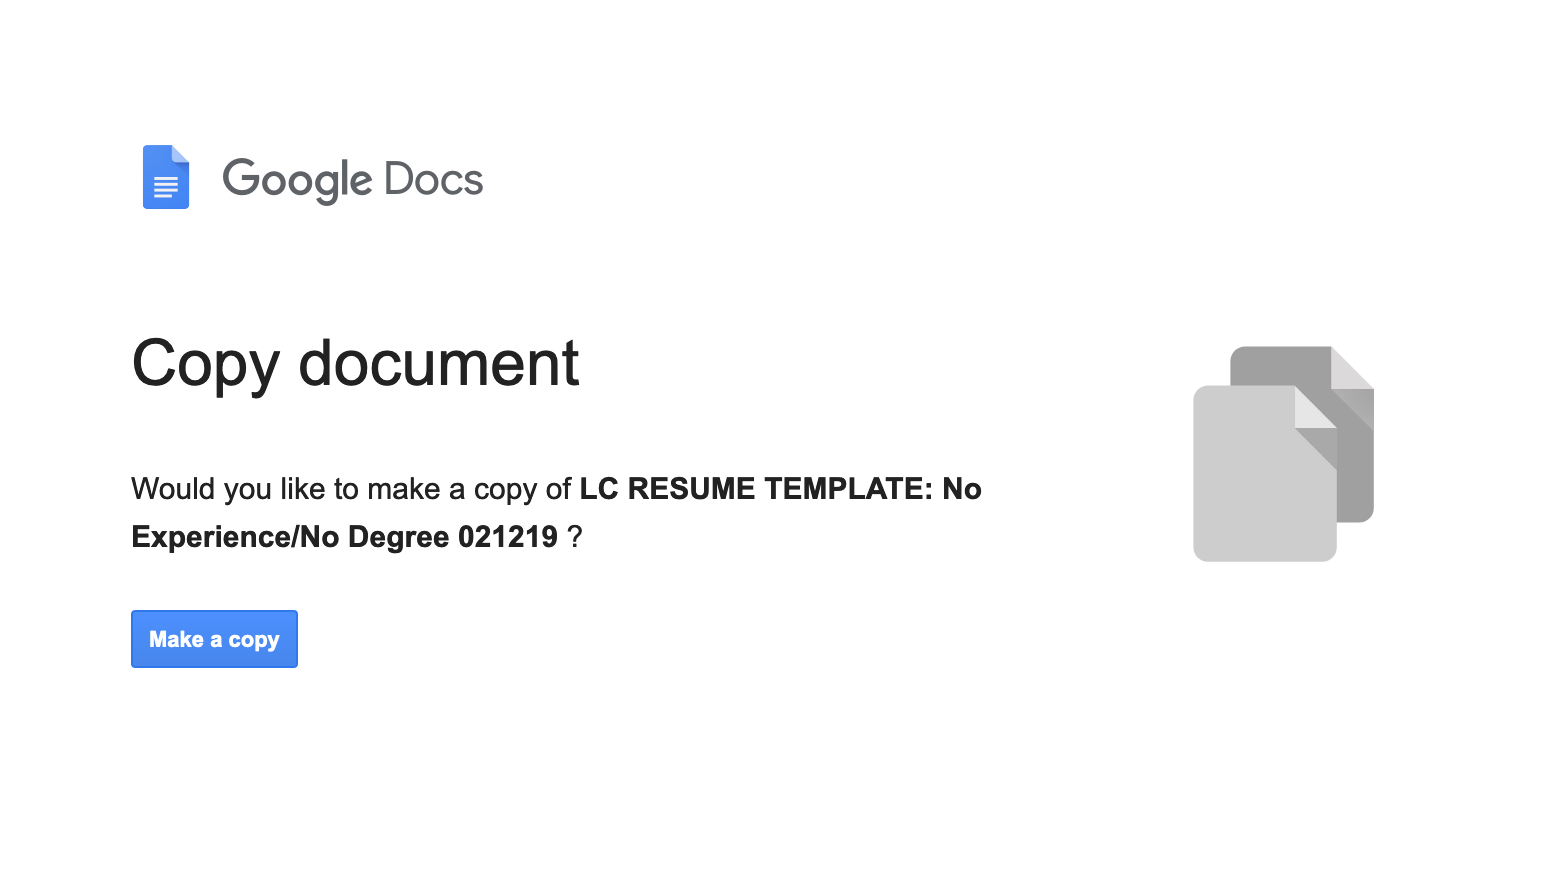 Copy document prompt